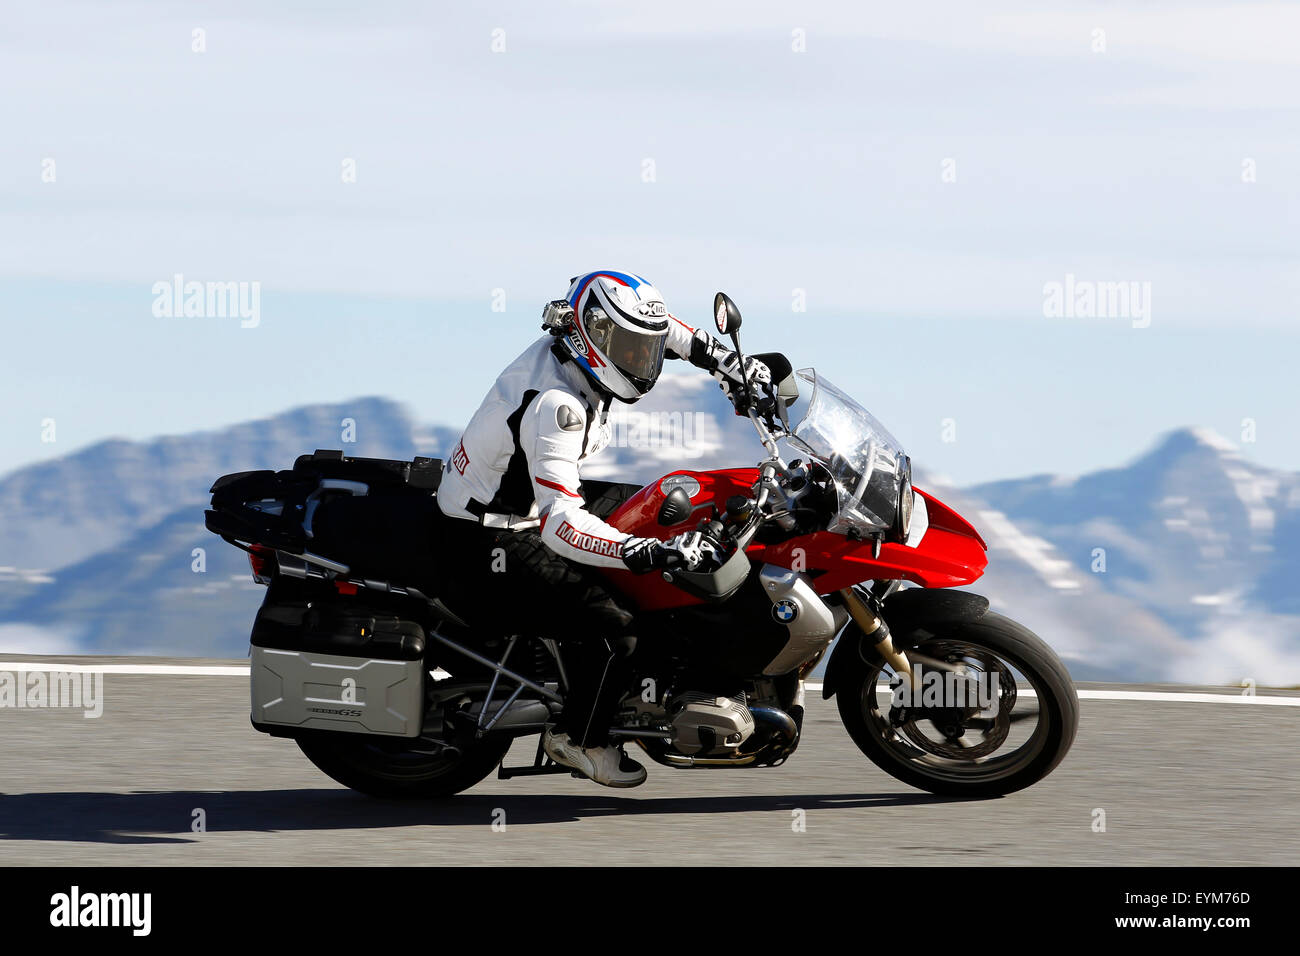 Motorcycle, BMW R 1200 GS, panning, right side, Stilfser Joch mountain pass, Stock Photo